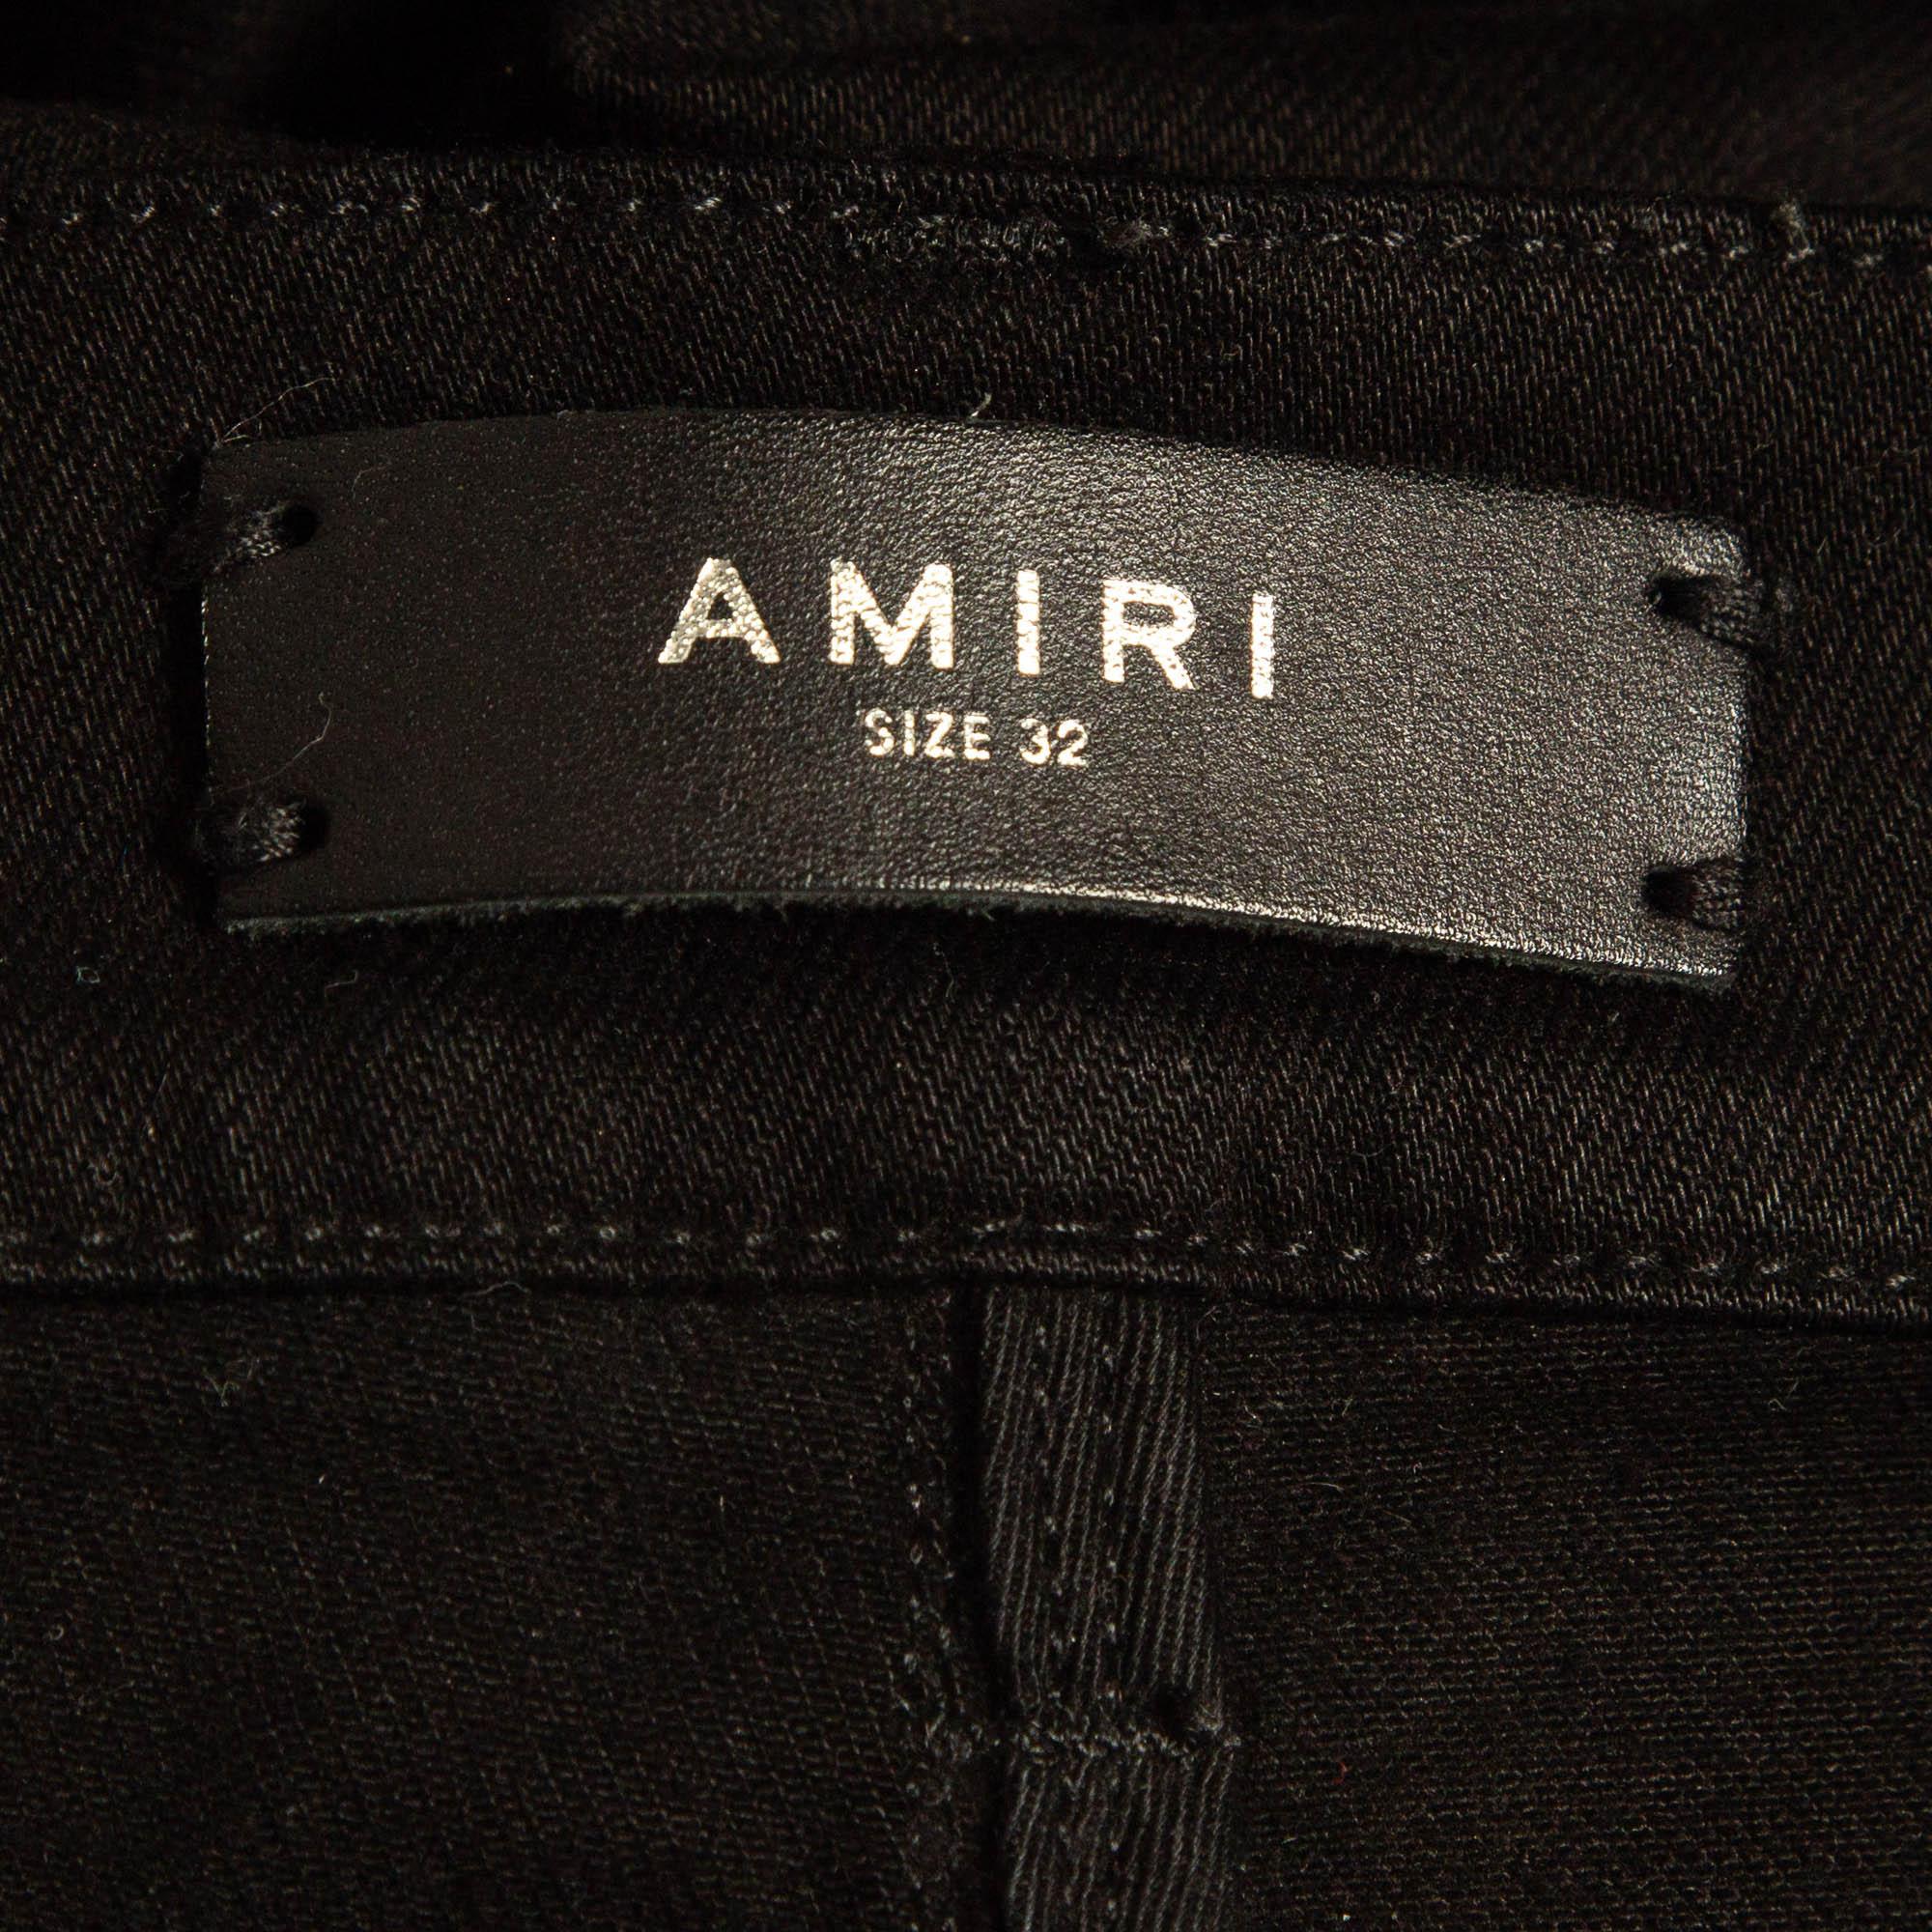 Amiri Black Denim Suede Patch Distressed Slim Fit Jeans M/Waist 32